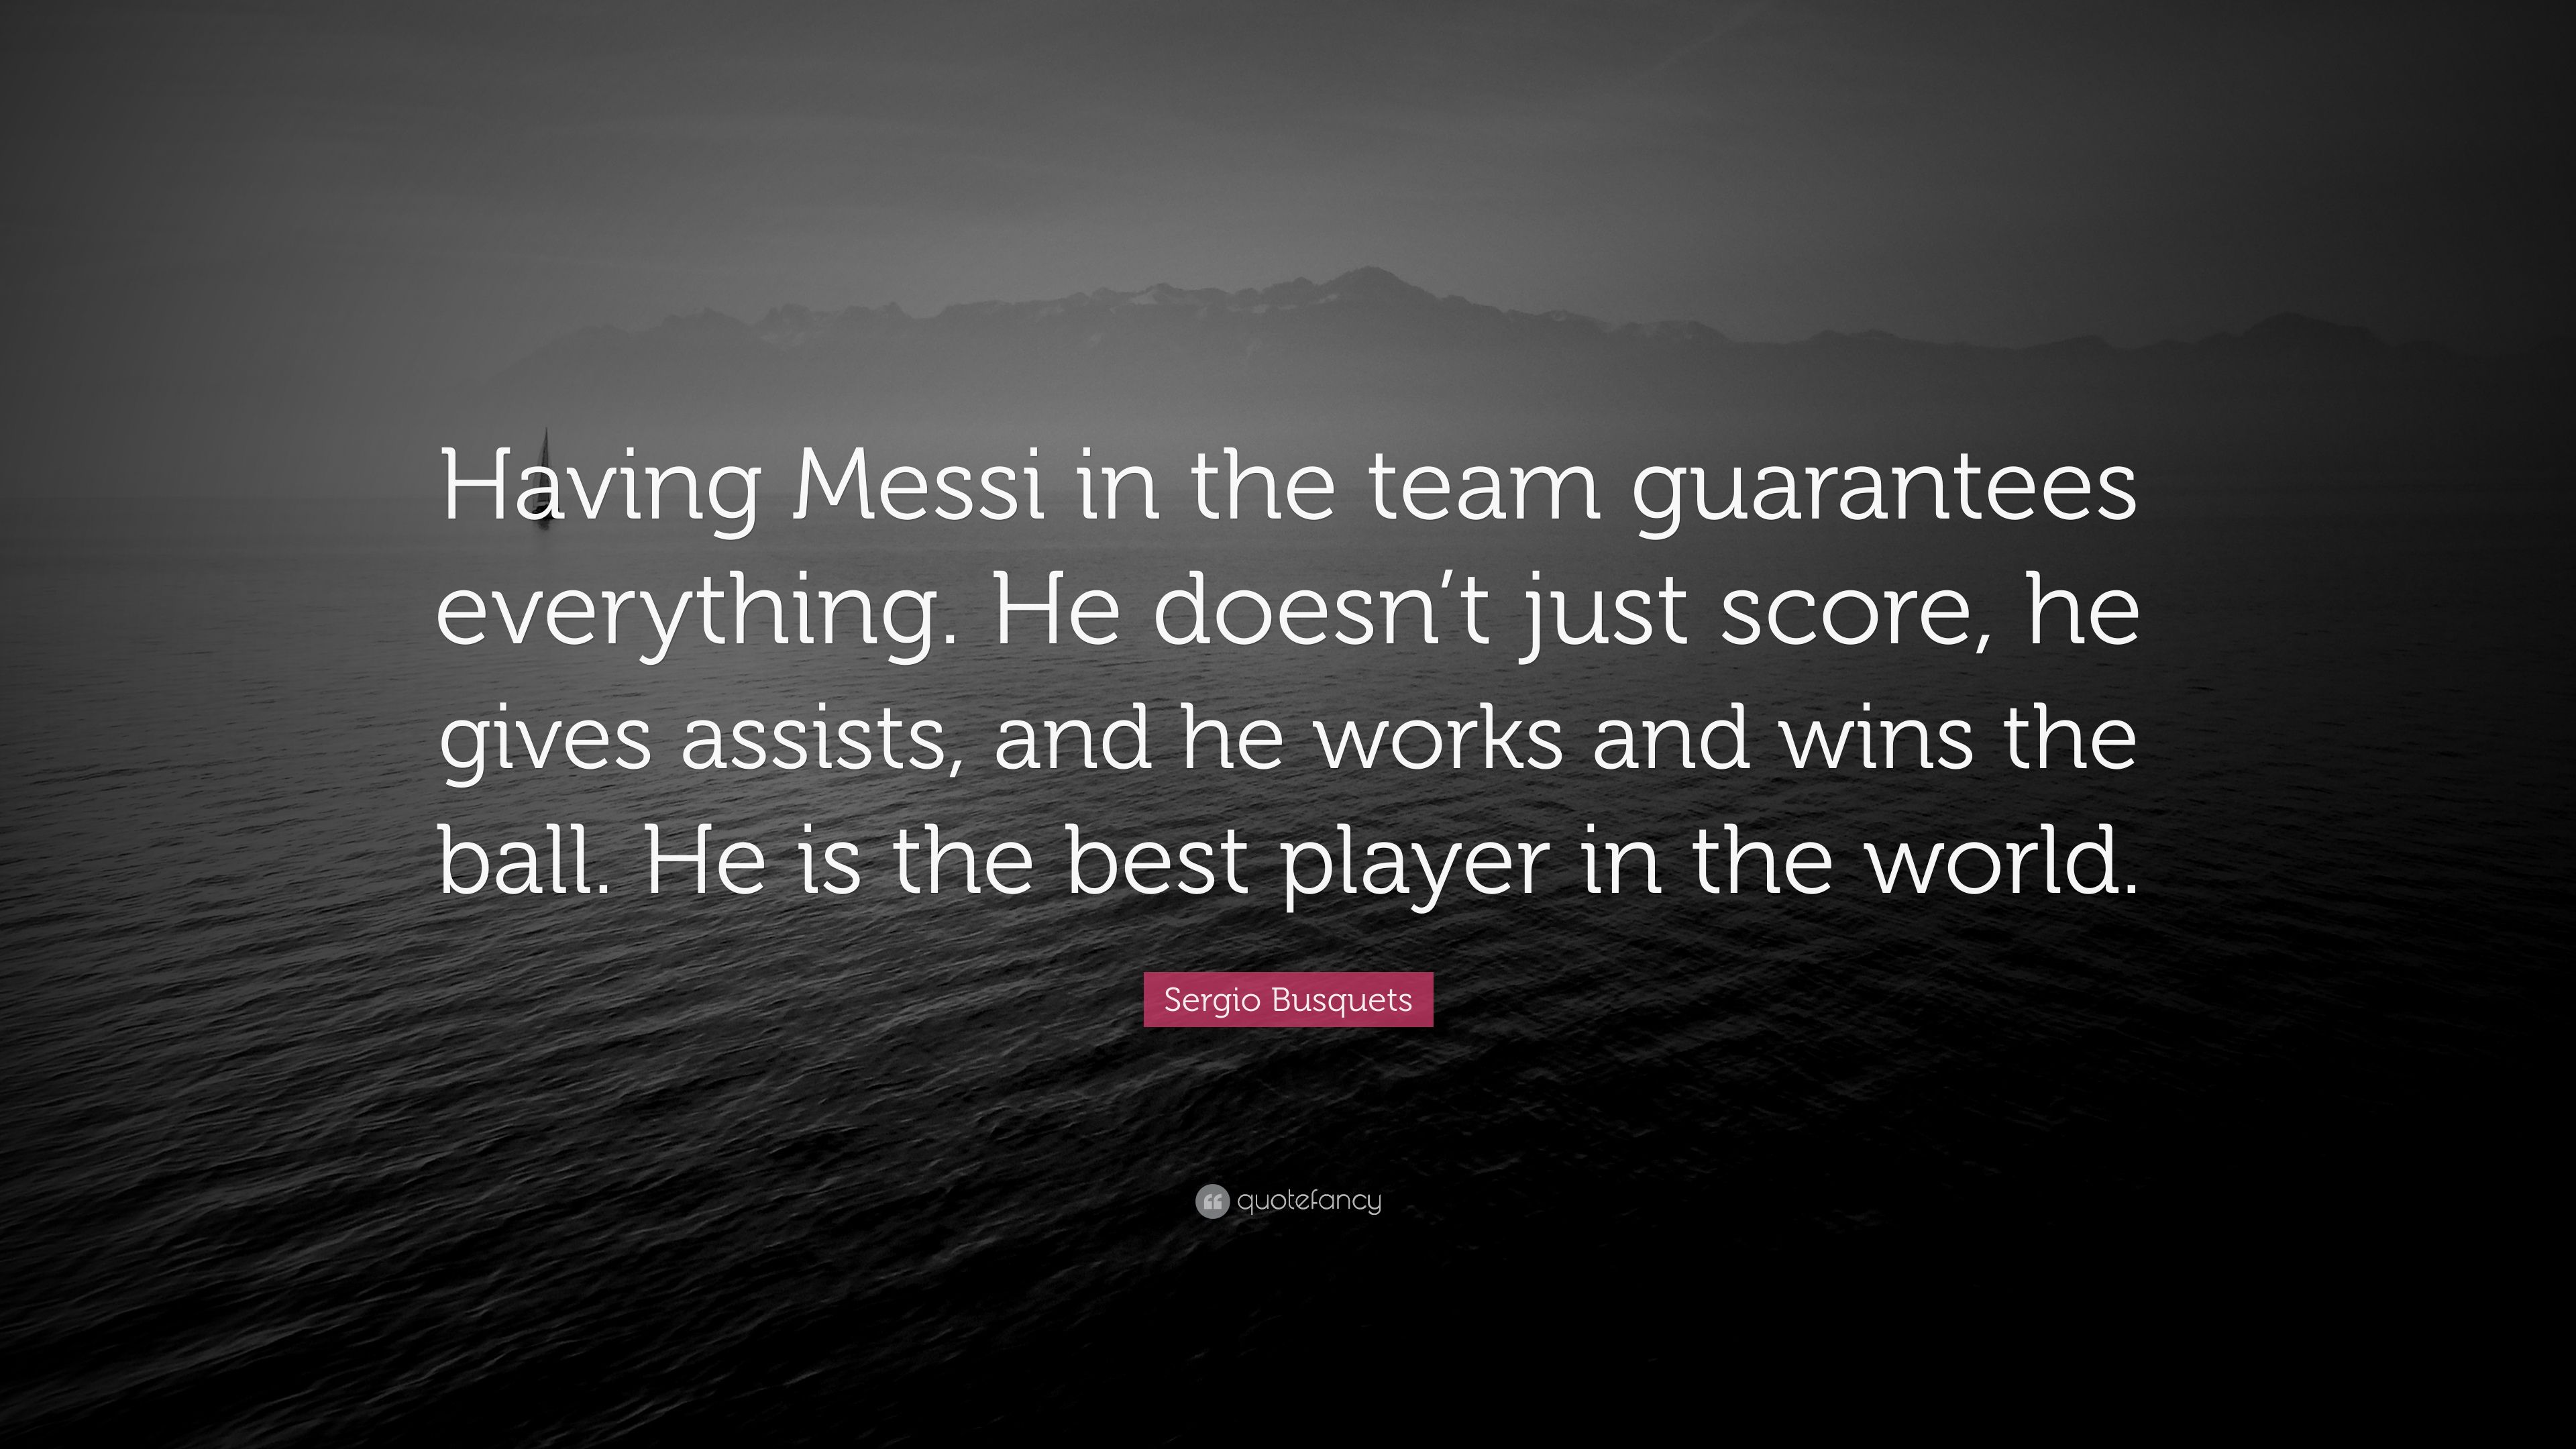 Sergio Busquets Quote: “Having Messi in the team guarantees